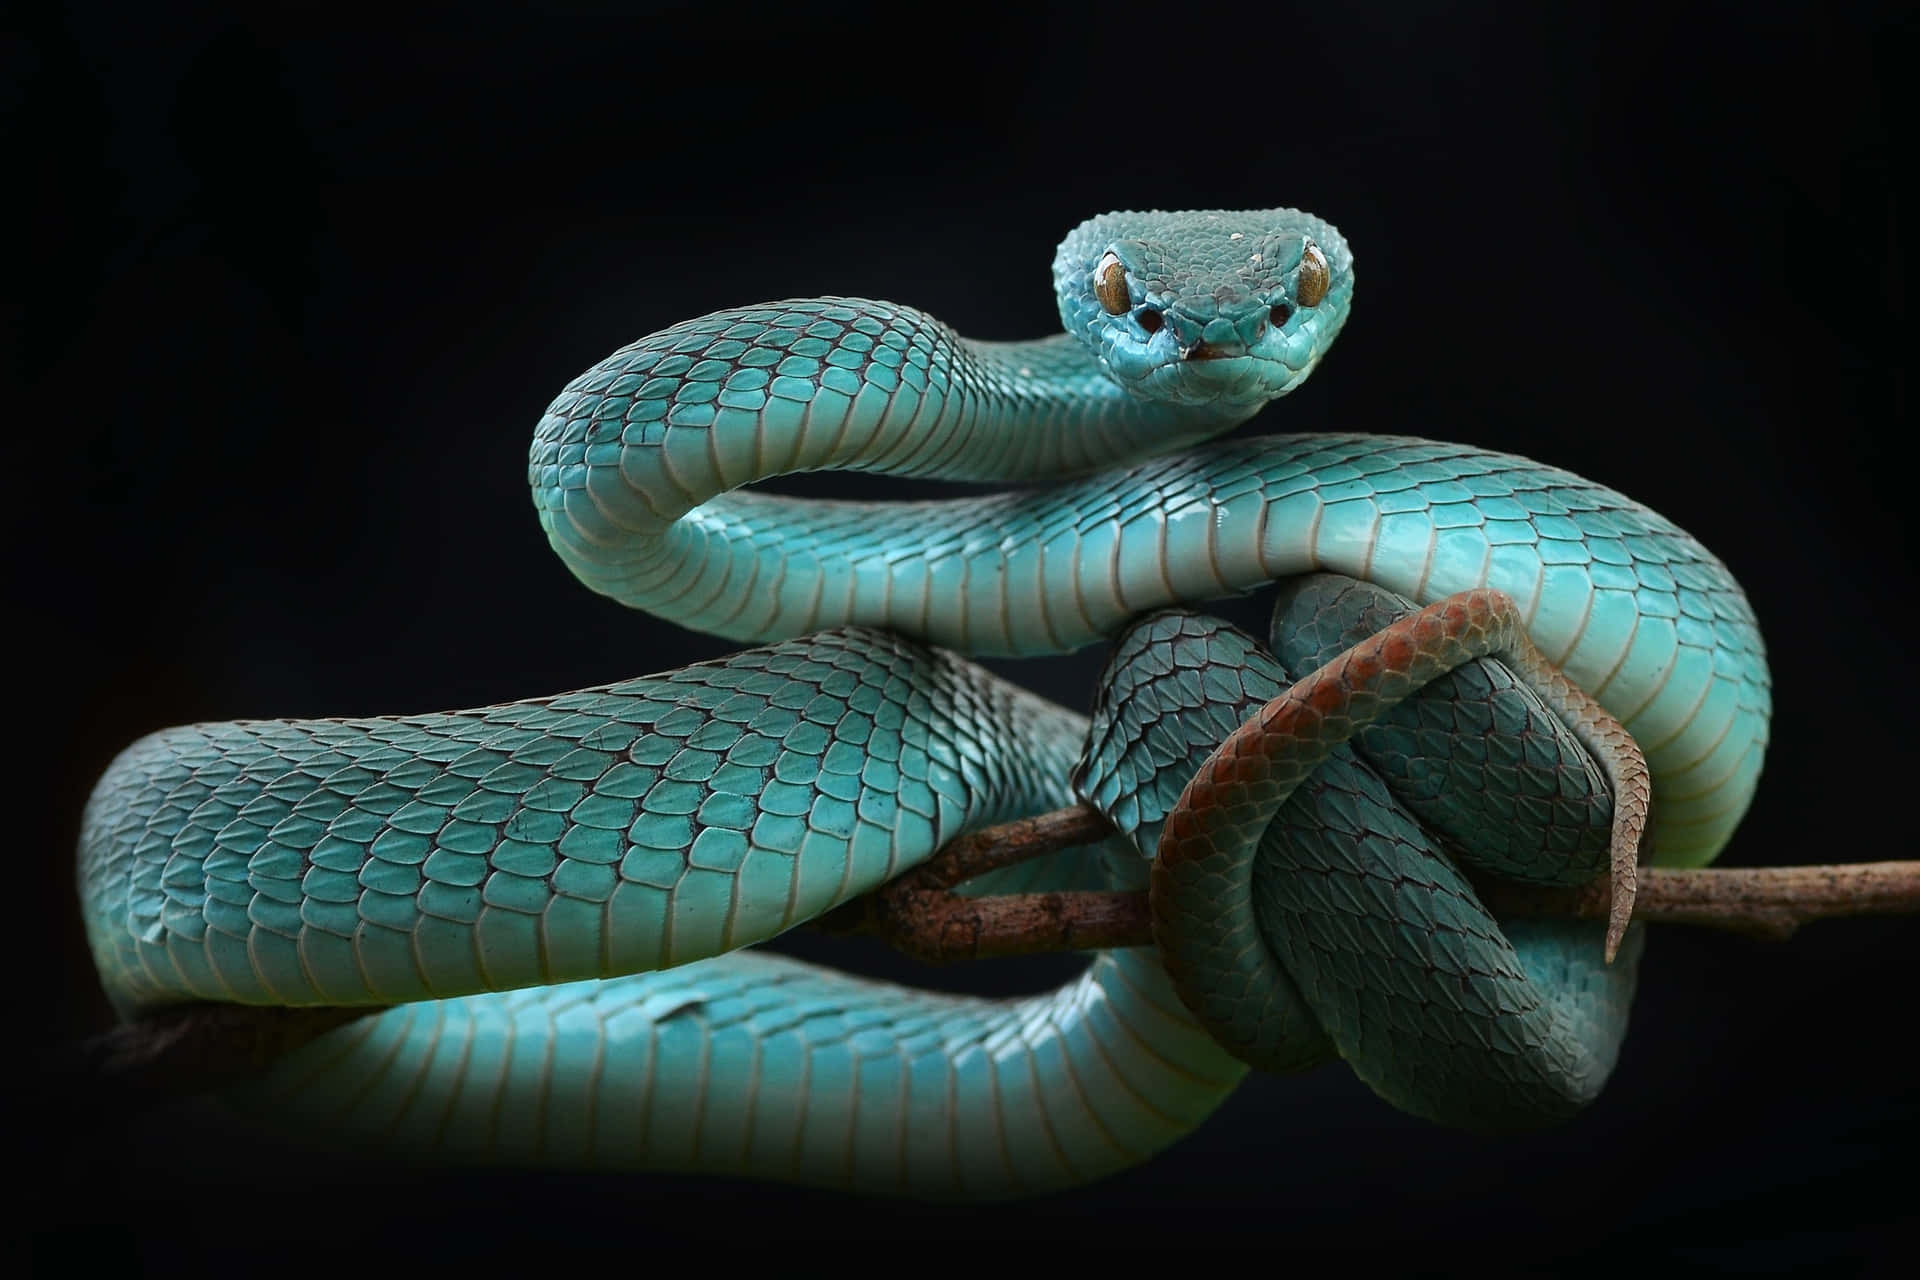 Slithery And Stylish - A Cool Snake Background